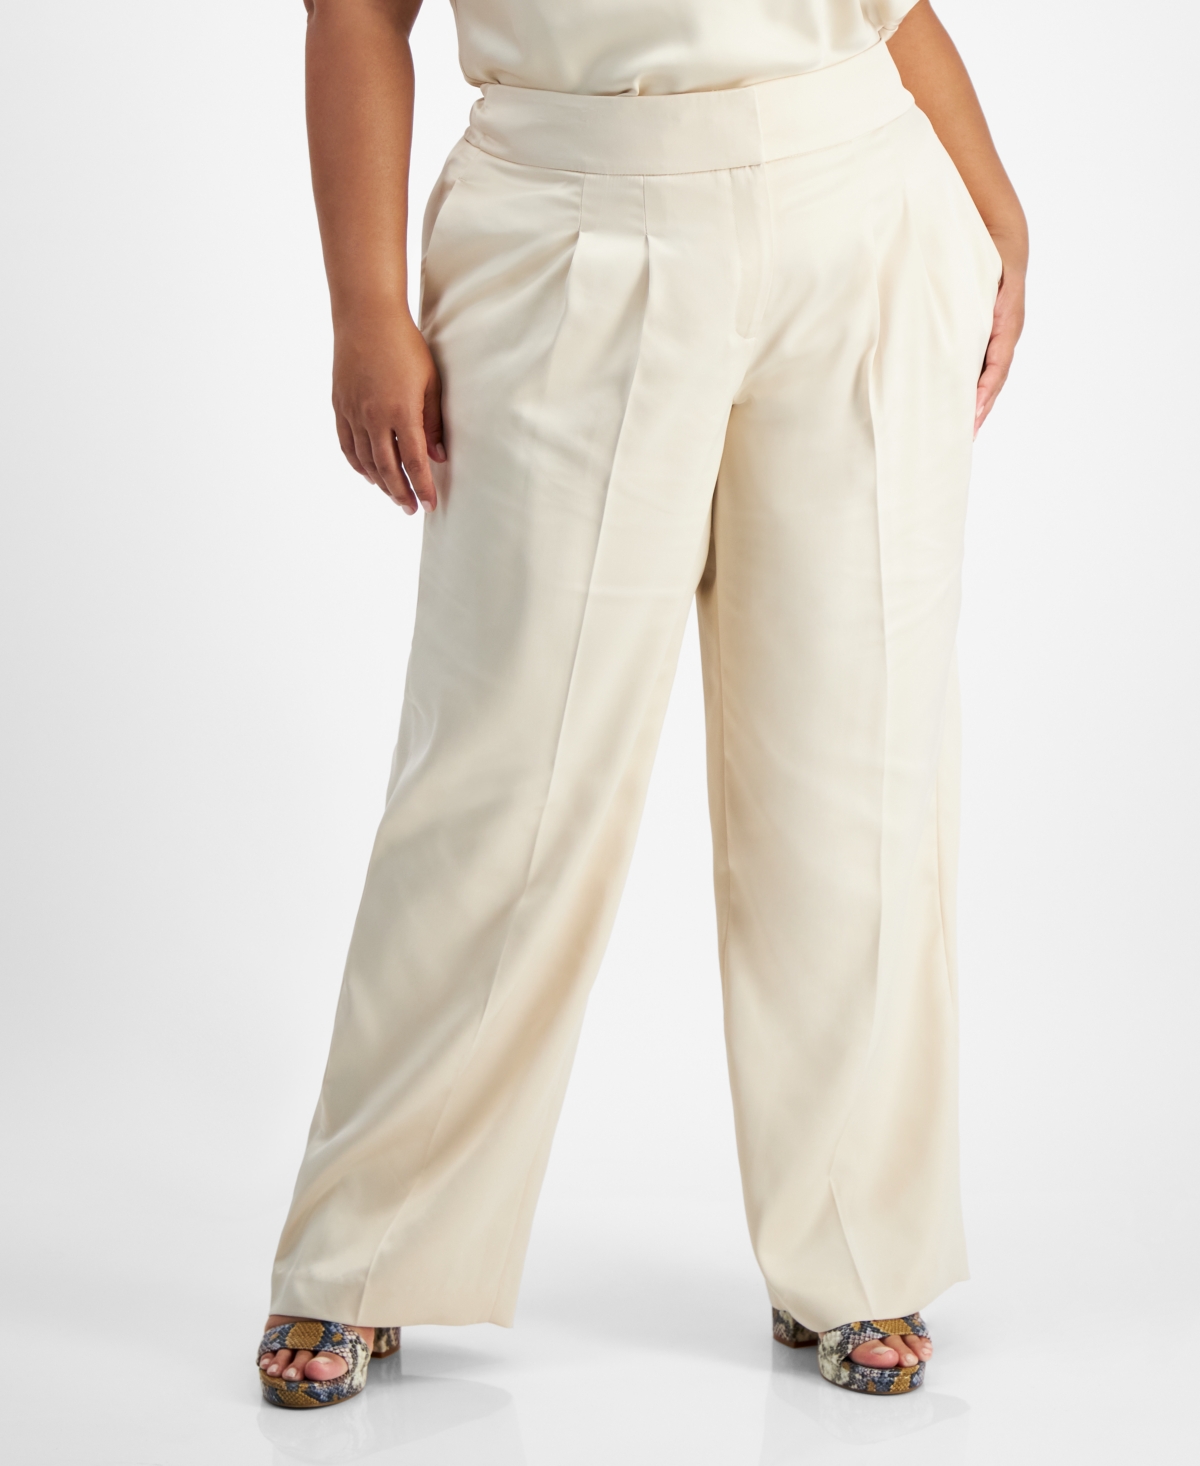 Bar Iii Plus Size High-rise Wide-leg Satin Pants, Created For Macy's In Light Tea